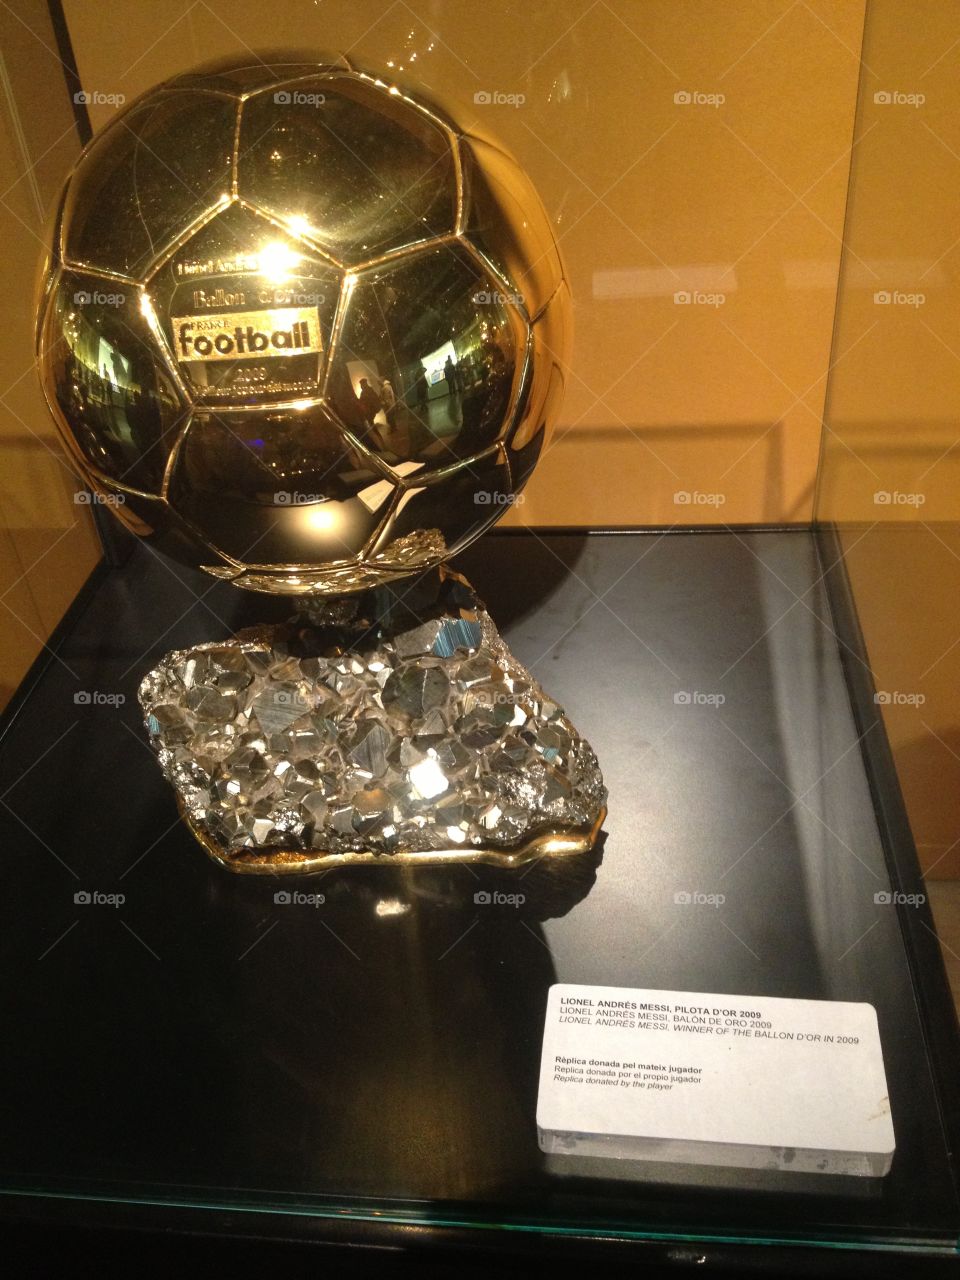 Lionel Messi ballor d or 2009 trophy 